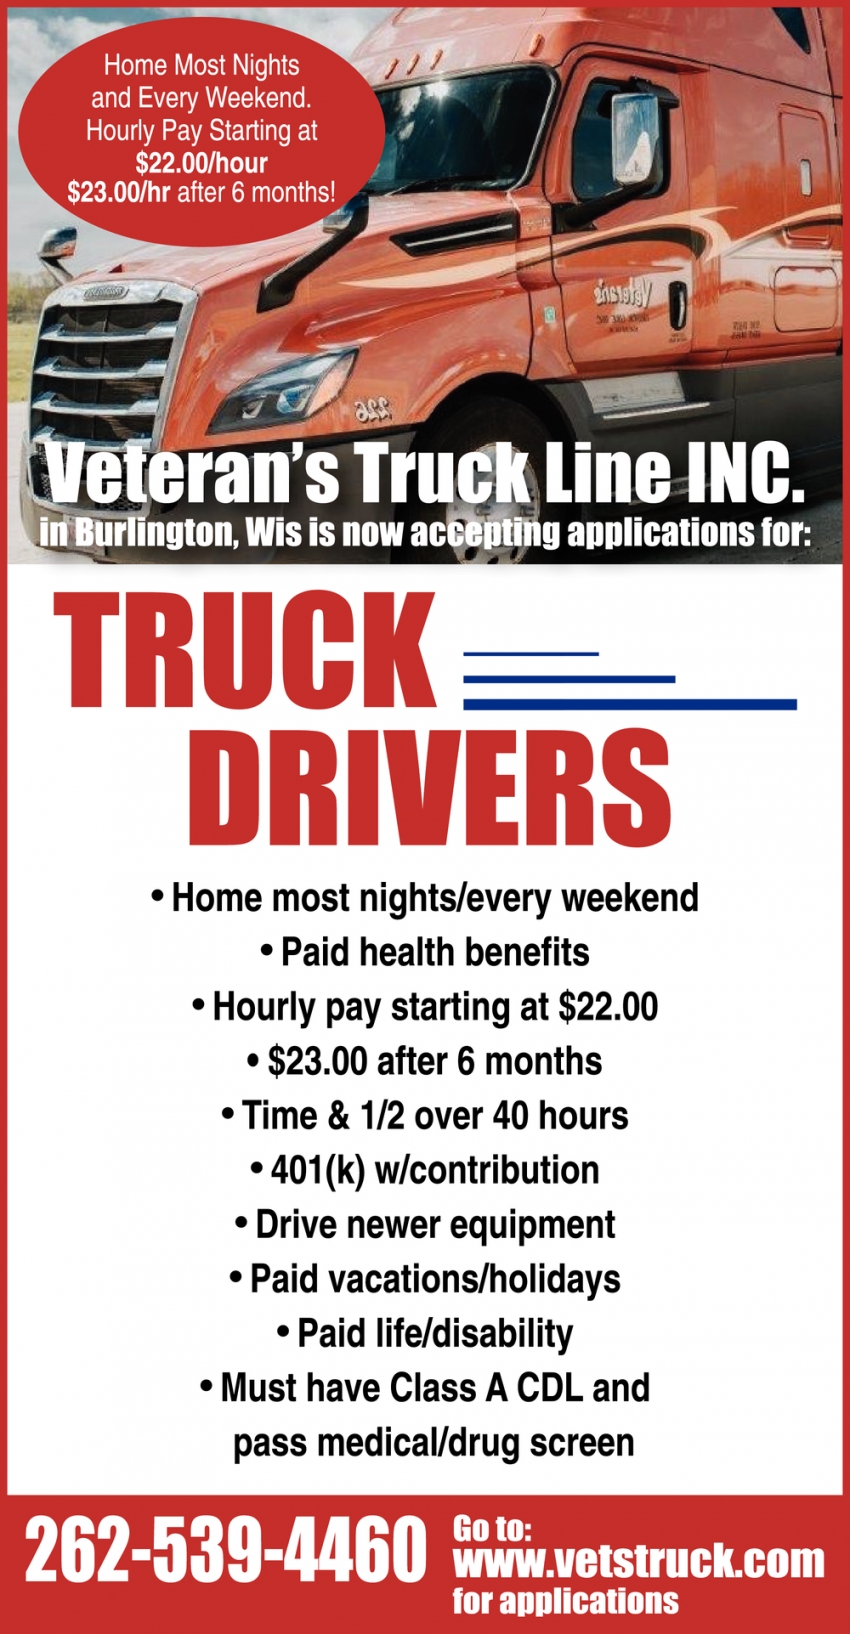 Truck Drivers